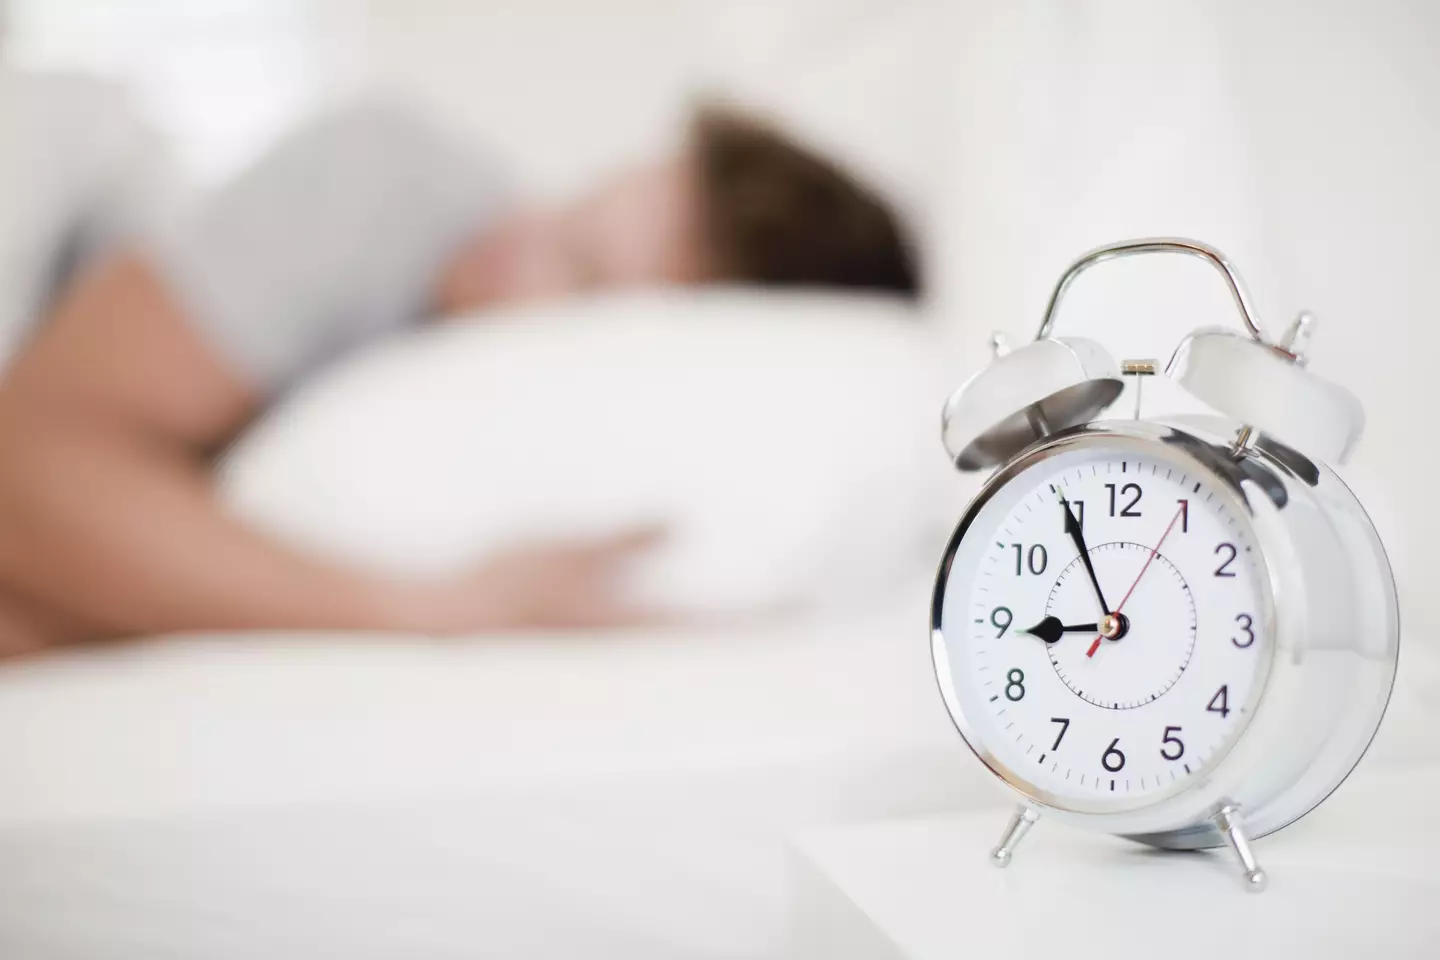 Grylls calls his alarm clock an 'opportunity clock'.